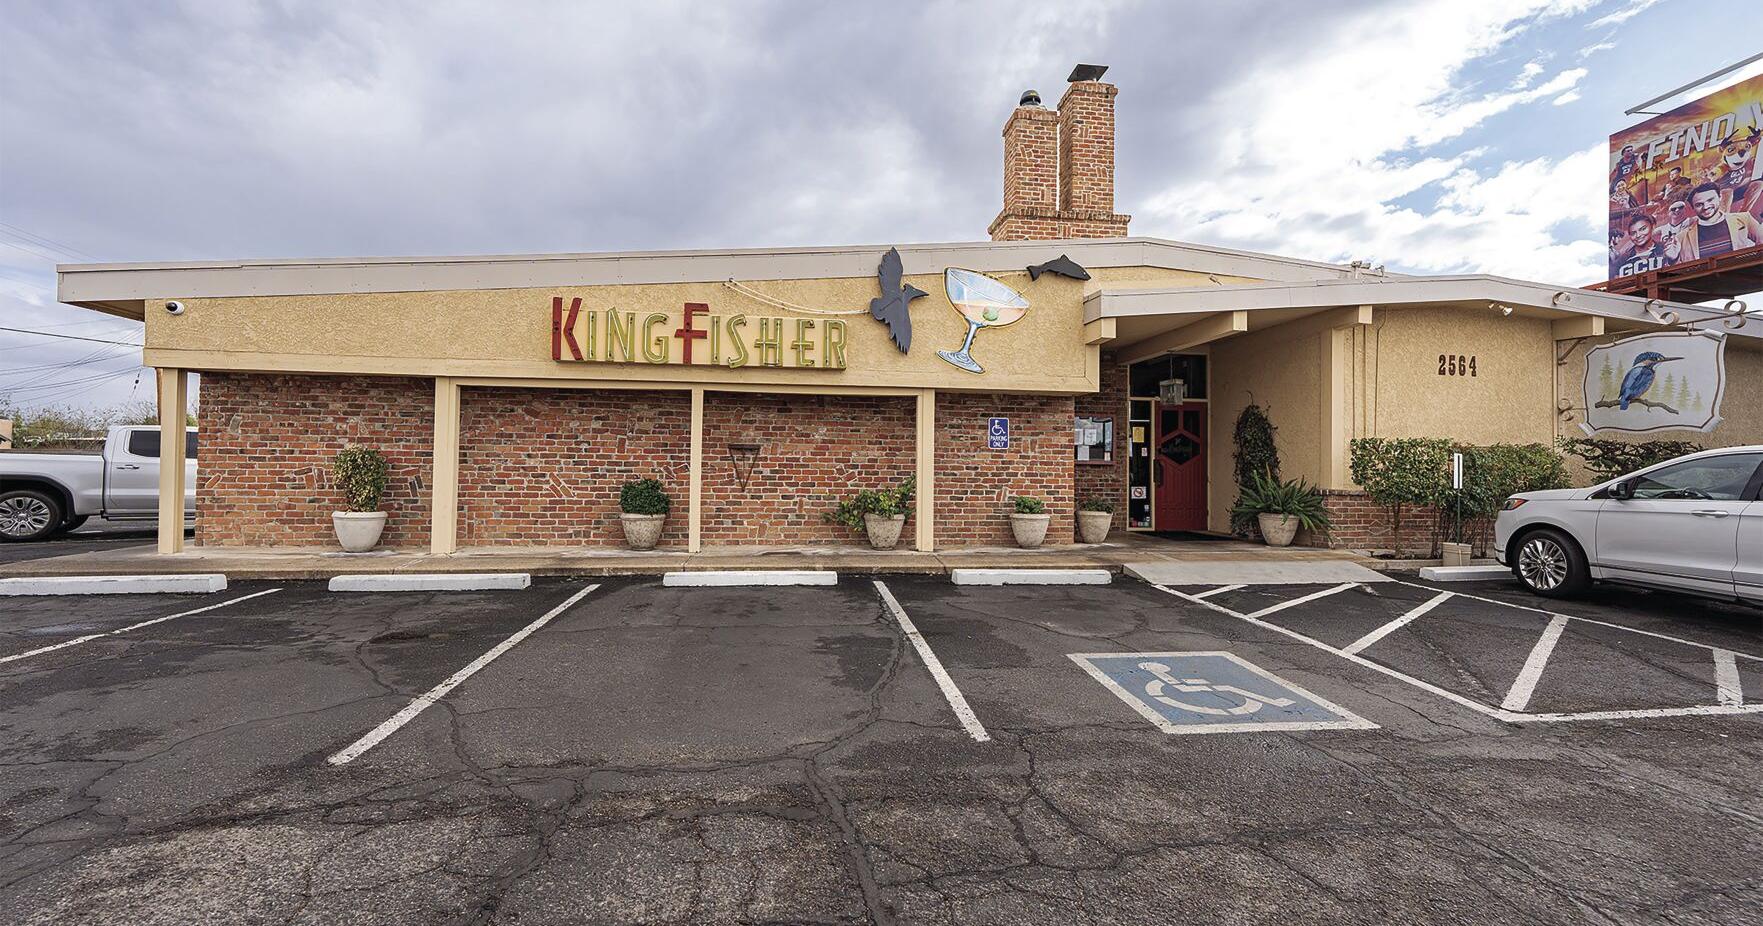 Kingfisher-building.jpg